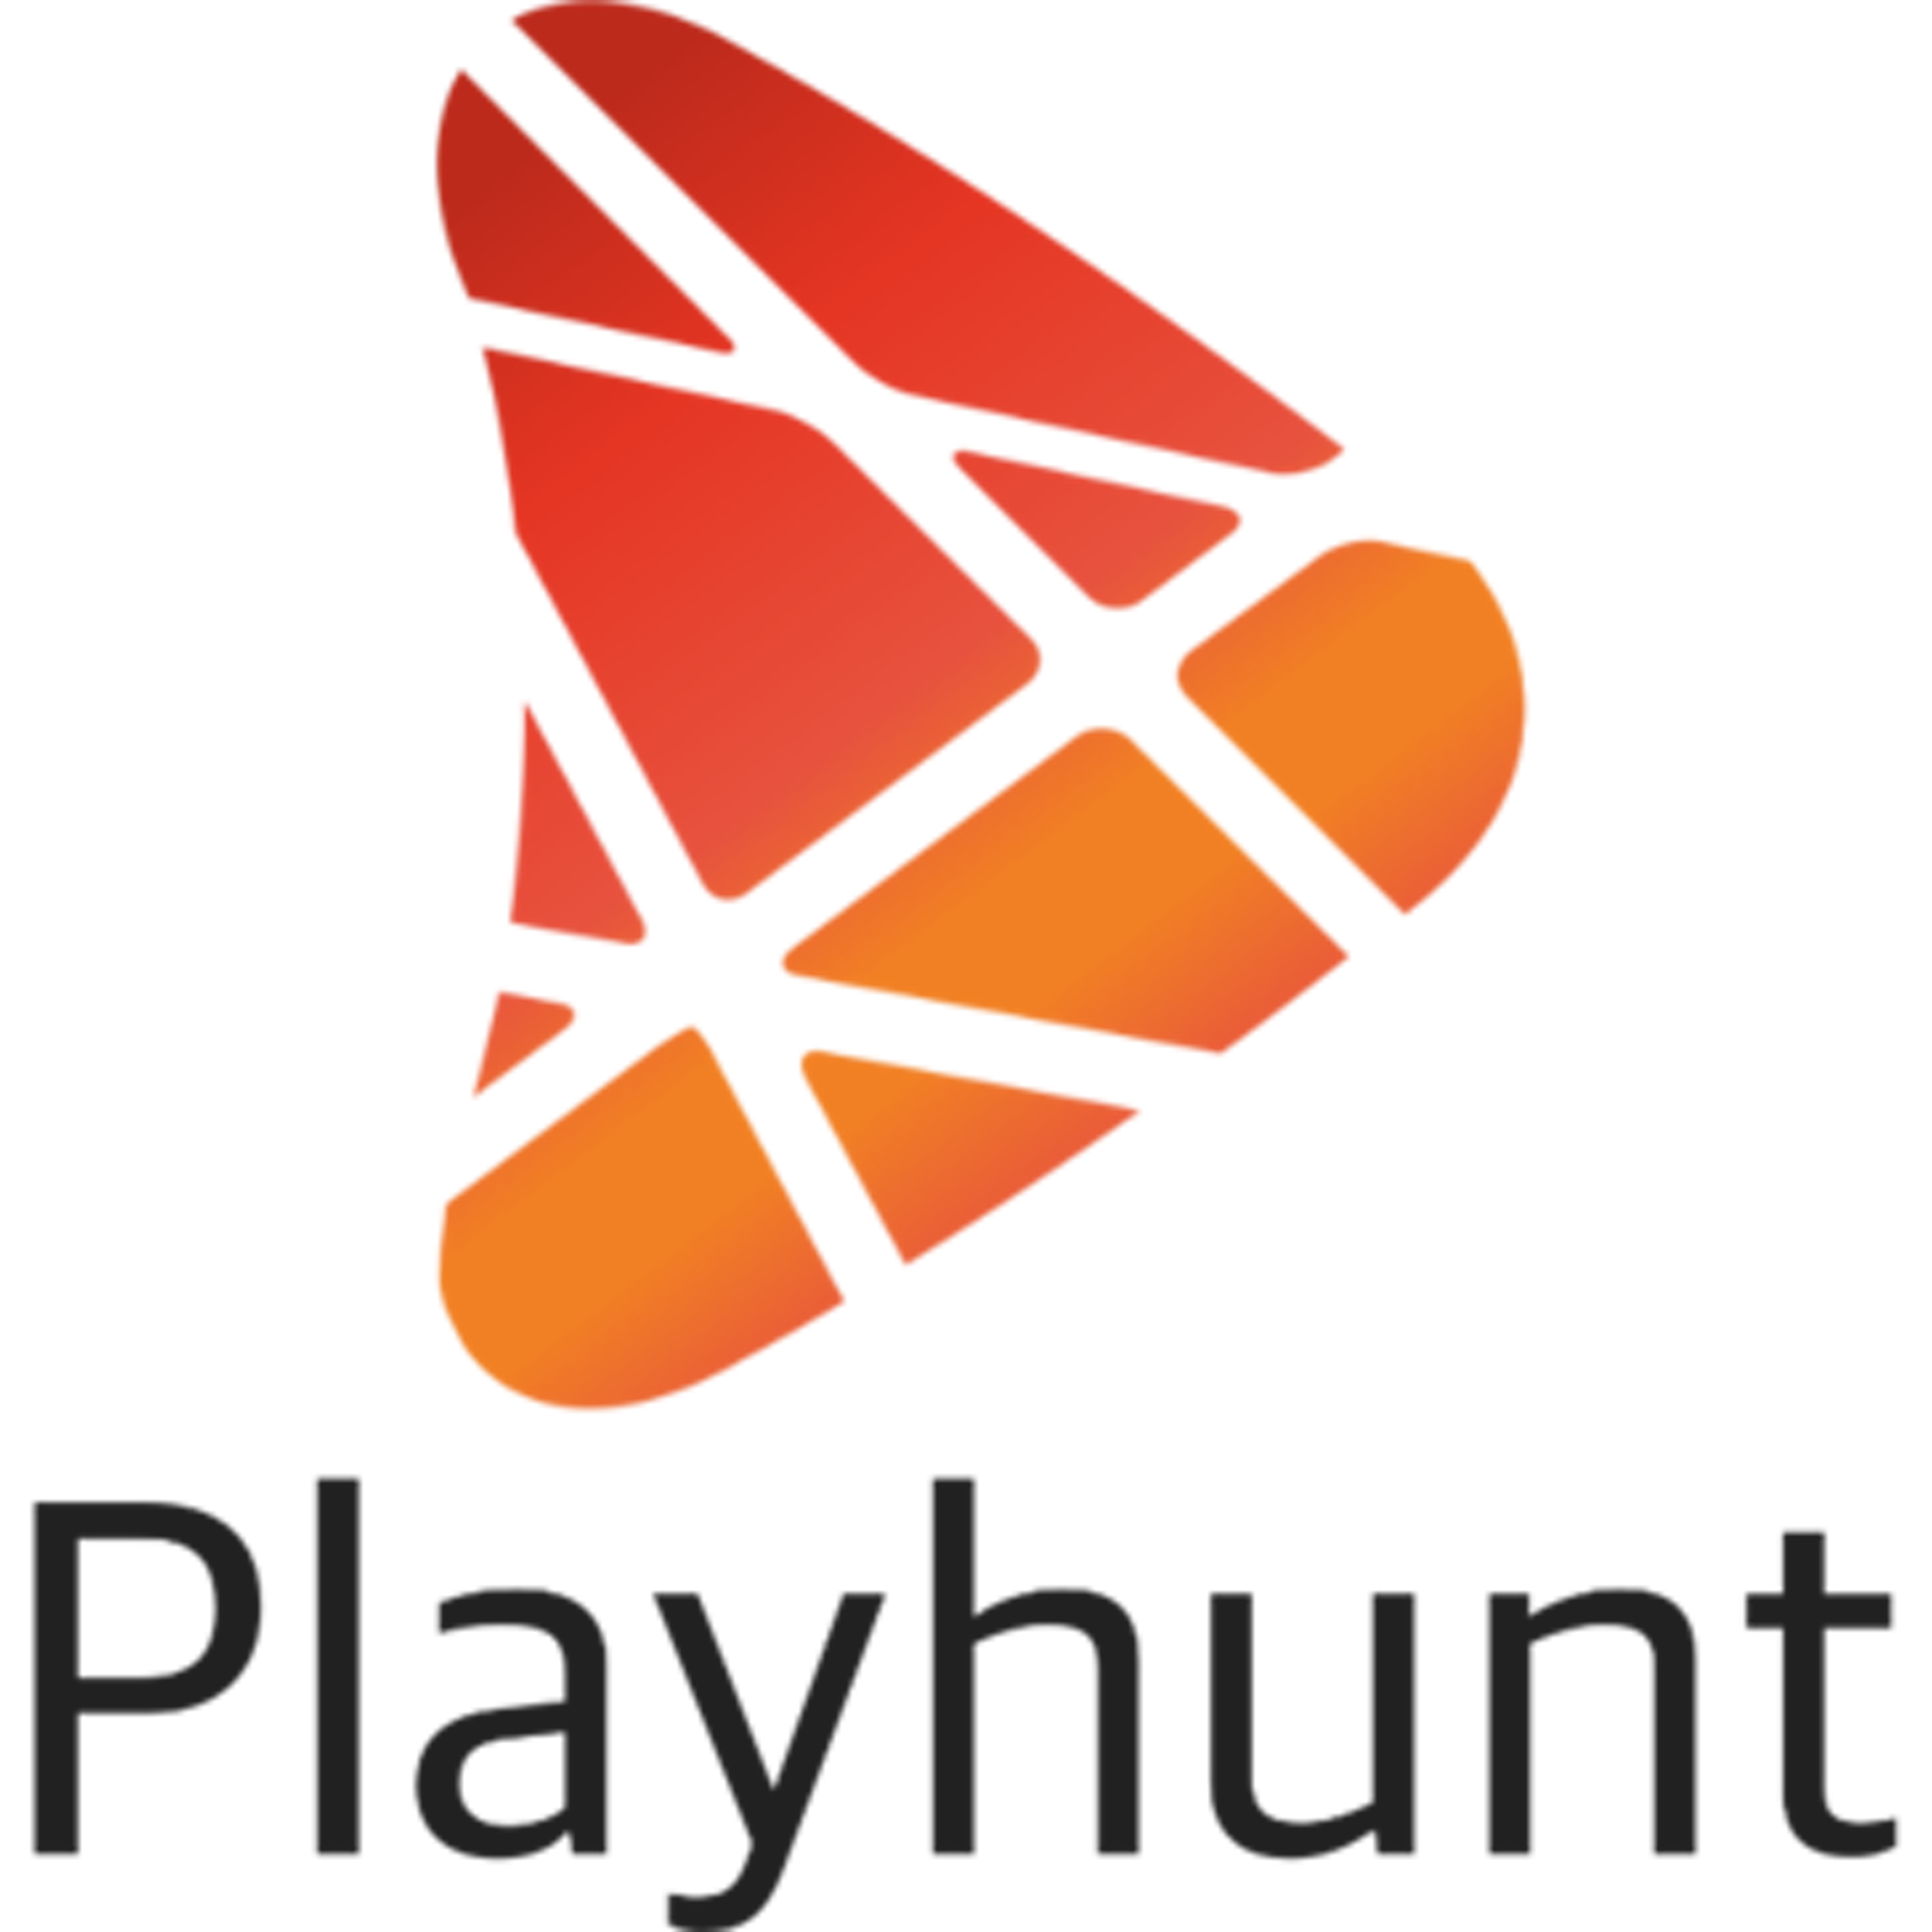 Playhunt Logo